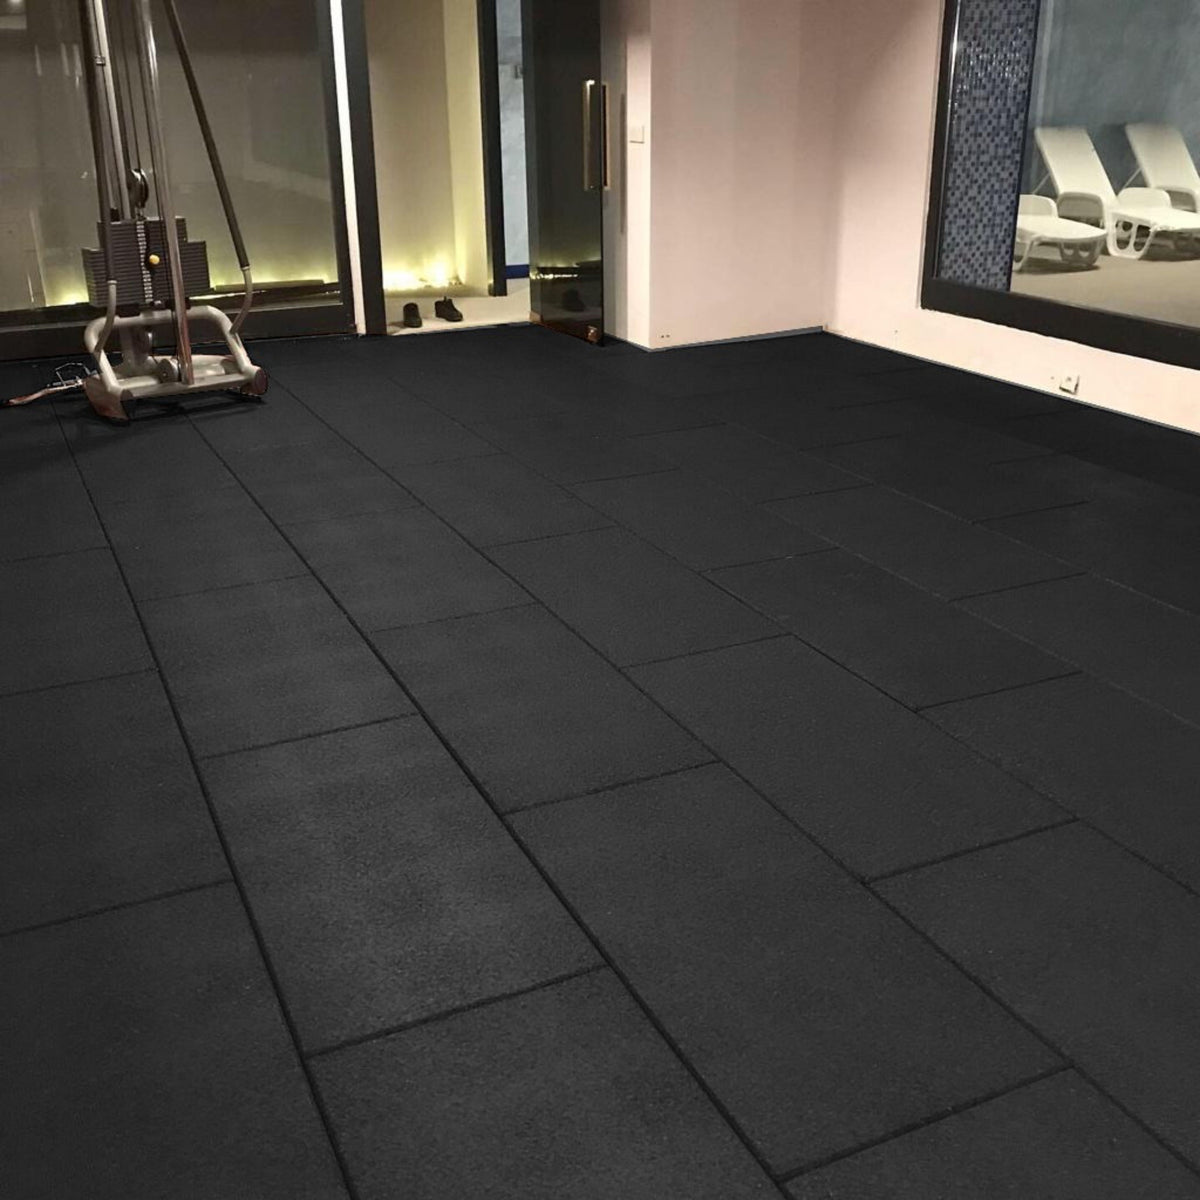 13m2 single garage package, BeFit Flatline Black Rubber Gym Flooring - Cannons UK